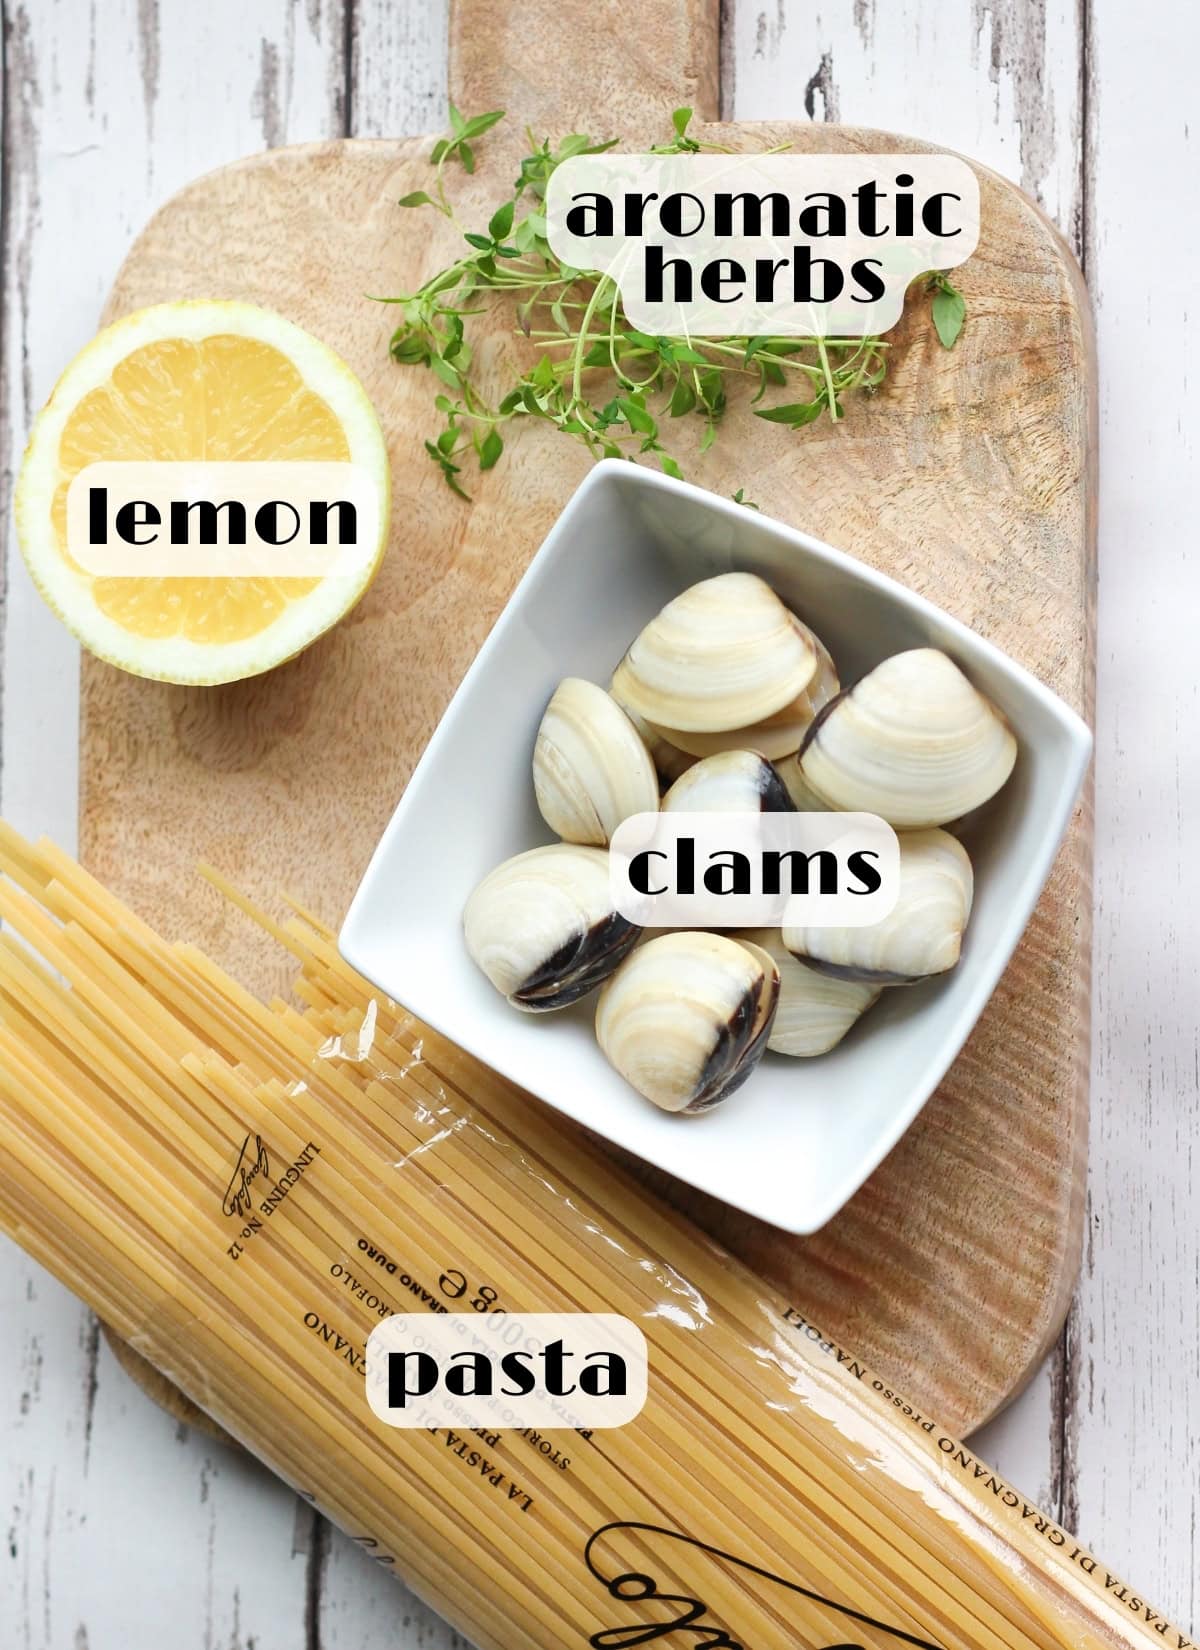 clam linguine ingredients: white clams, linguine pasta, lemon, parsley.